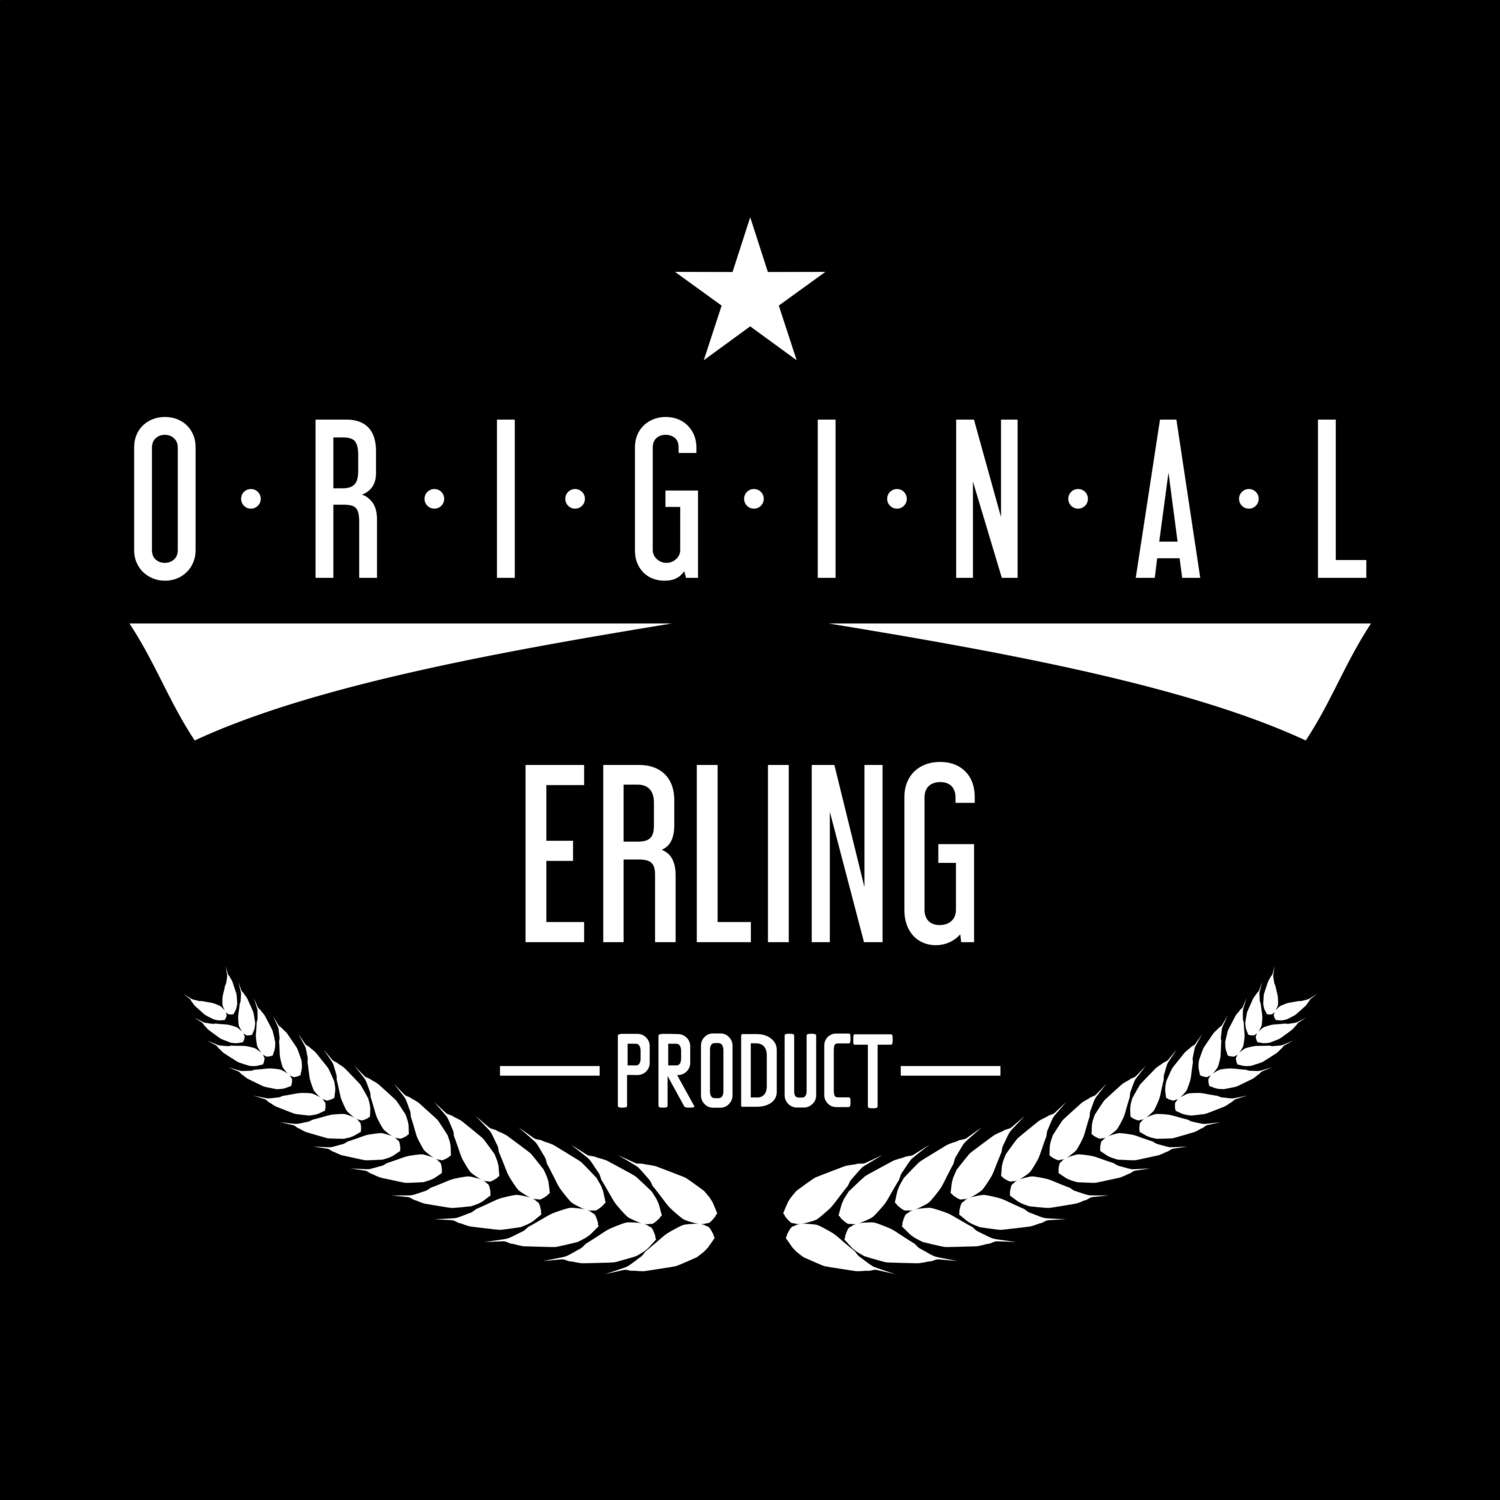 Erling T-Shirt »Original Product«